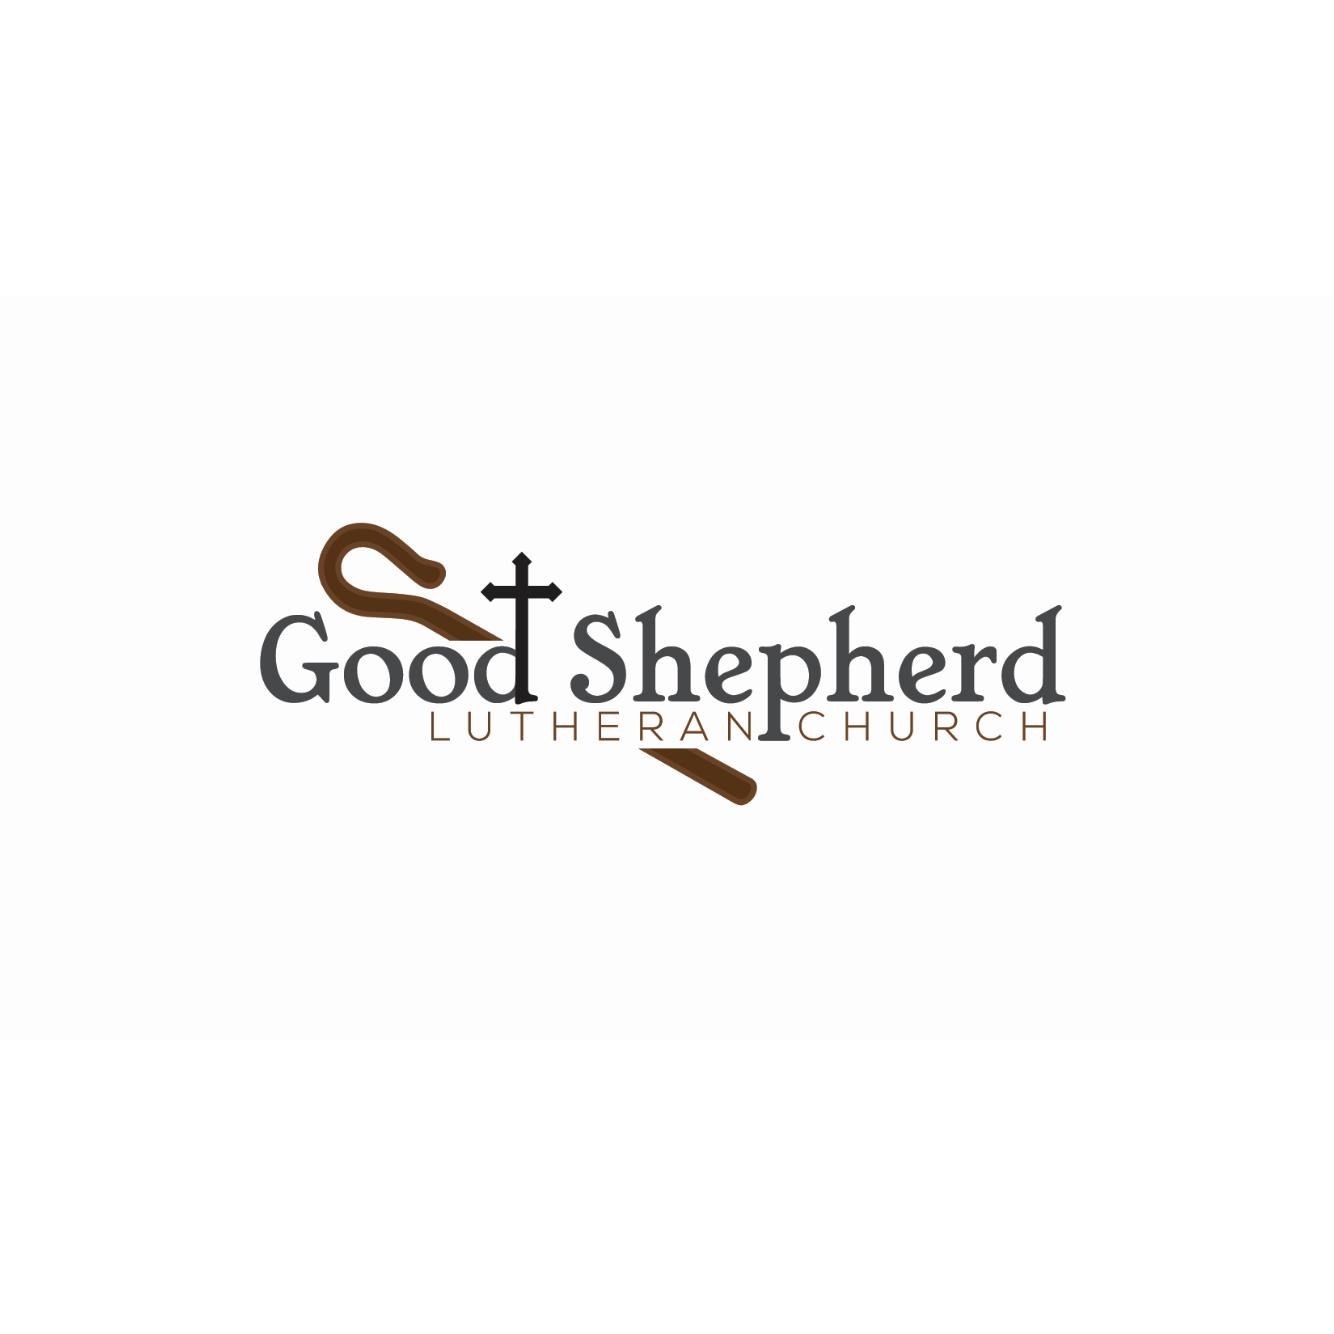 Good Shepherd Lutheran Church in Menifee, CA